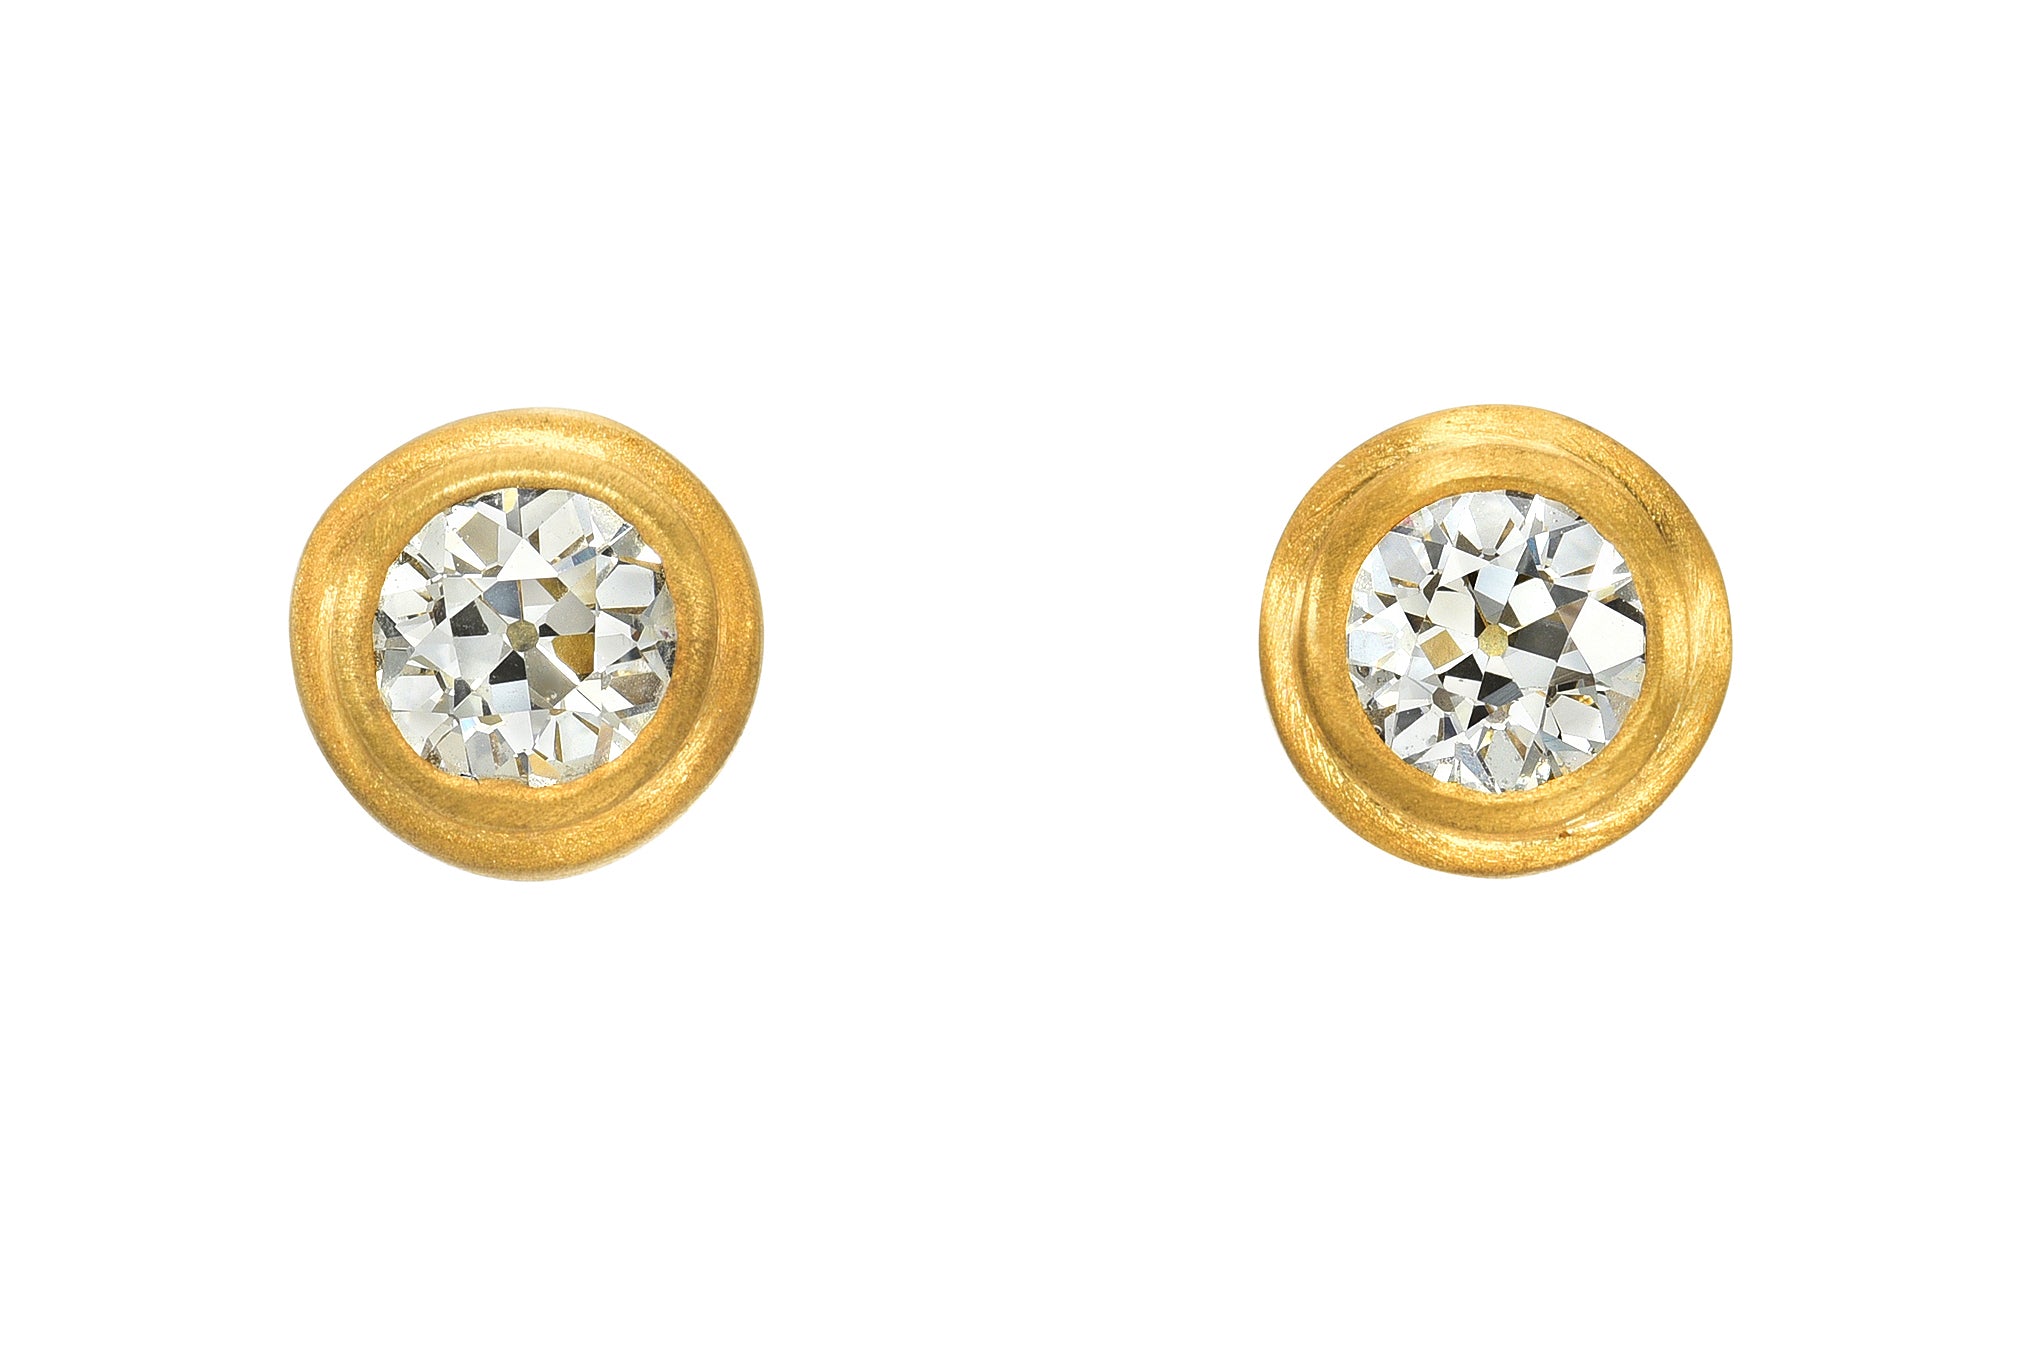 Darius Jewels Ziggurat Diamond Studs Earrings 18K Fairmined Yellow Gold Antique Old Mine Cut